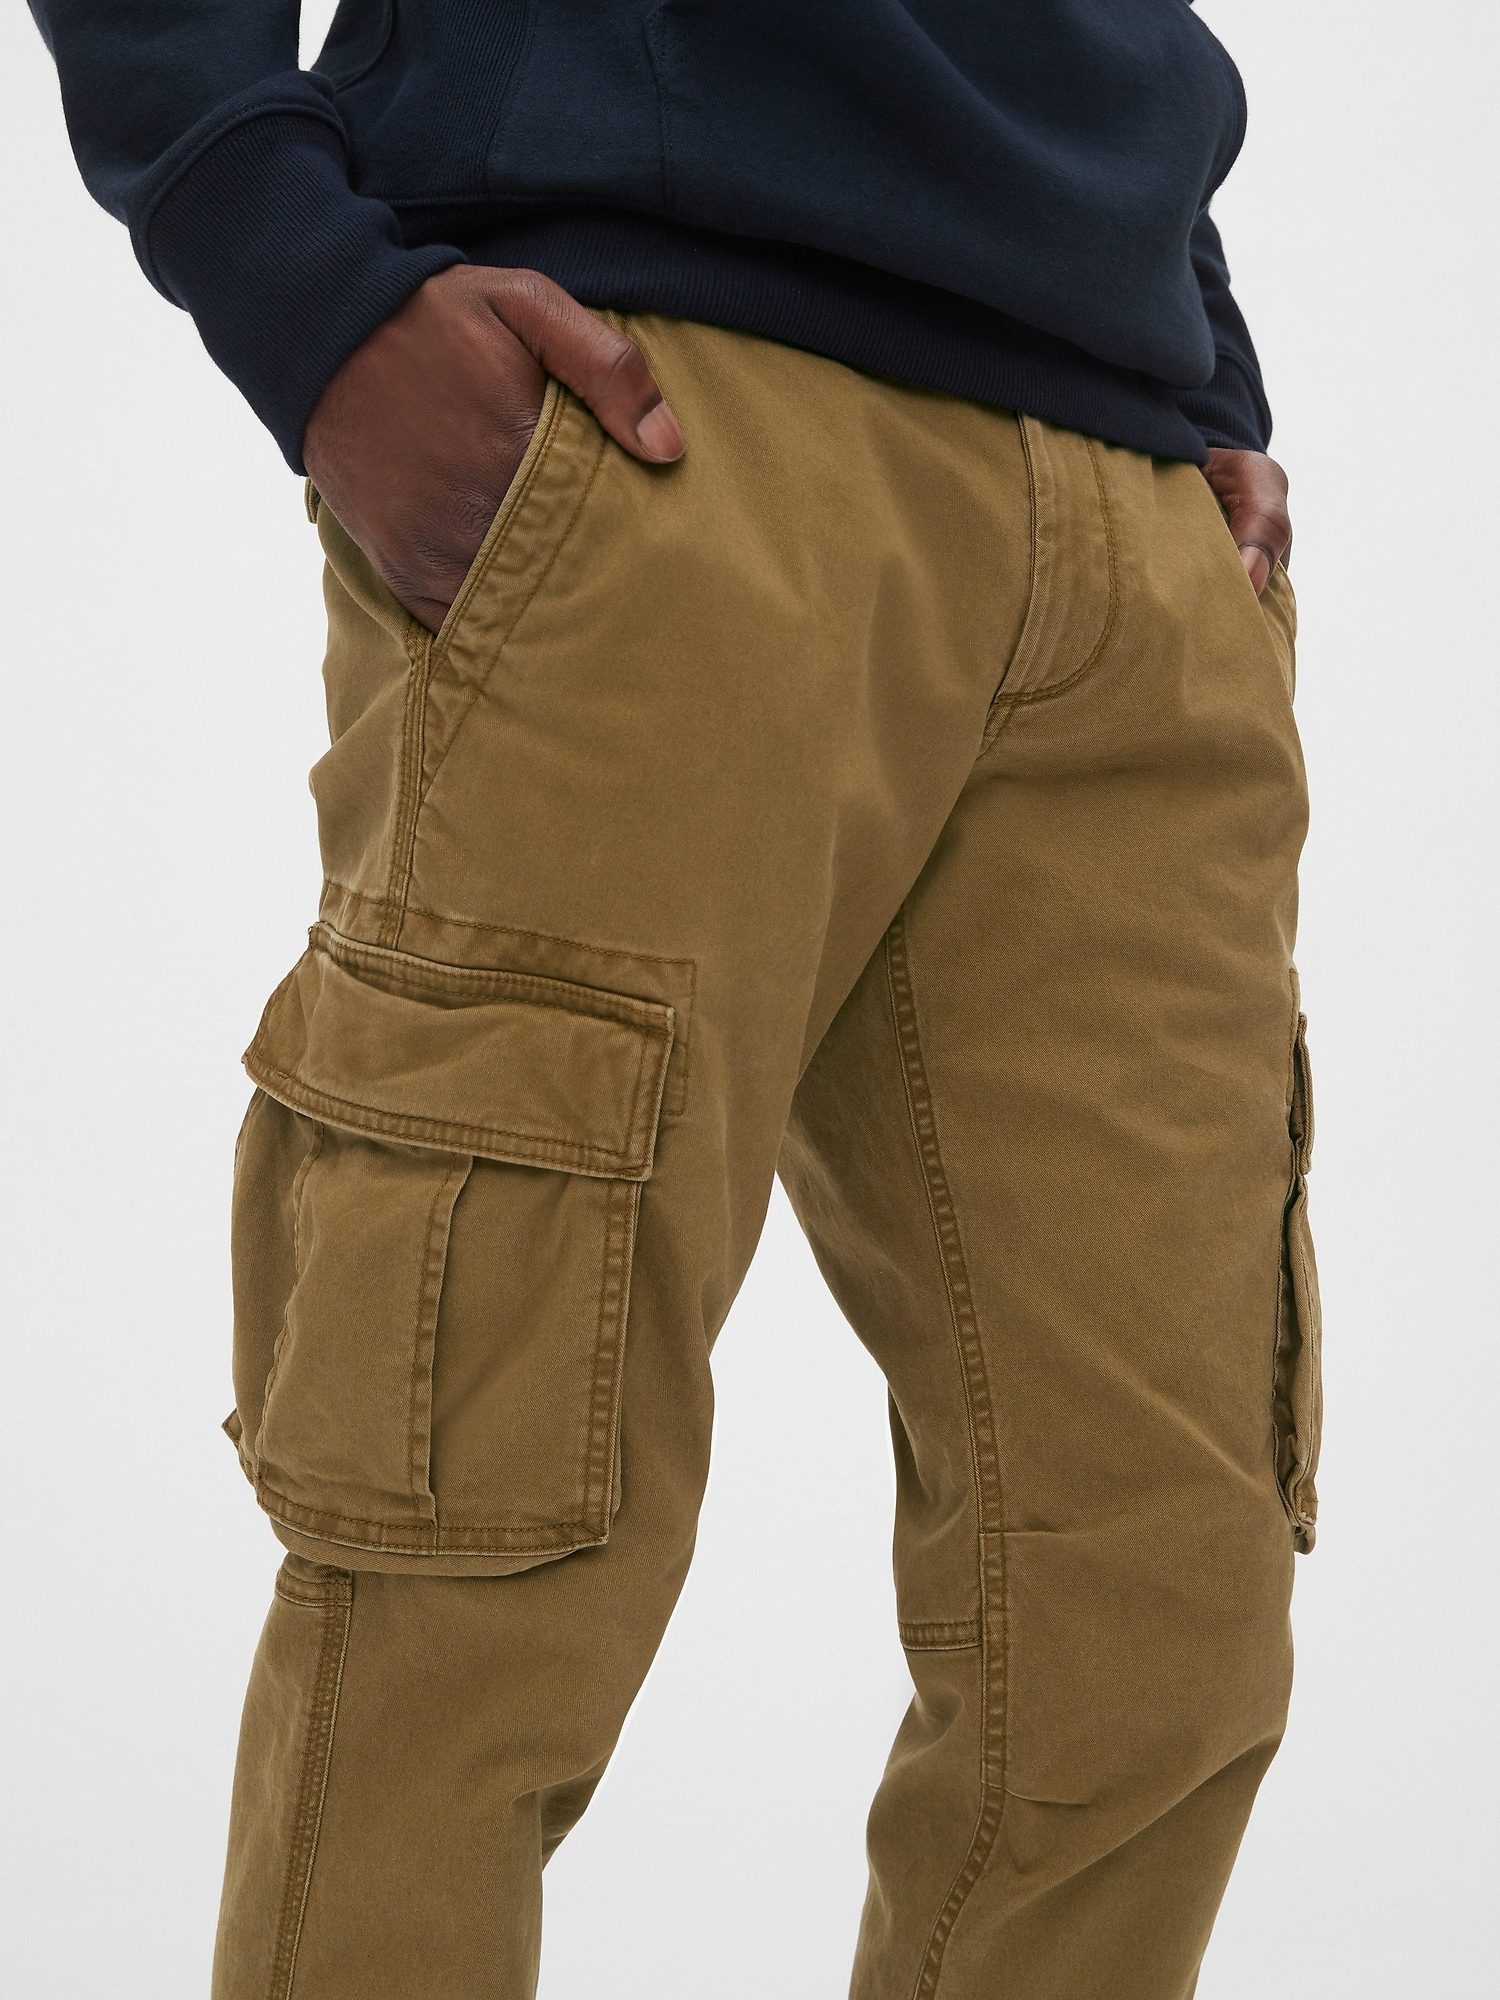 bootcut cargo pants mens